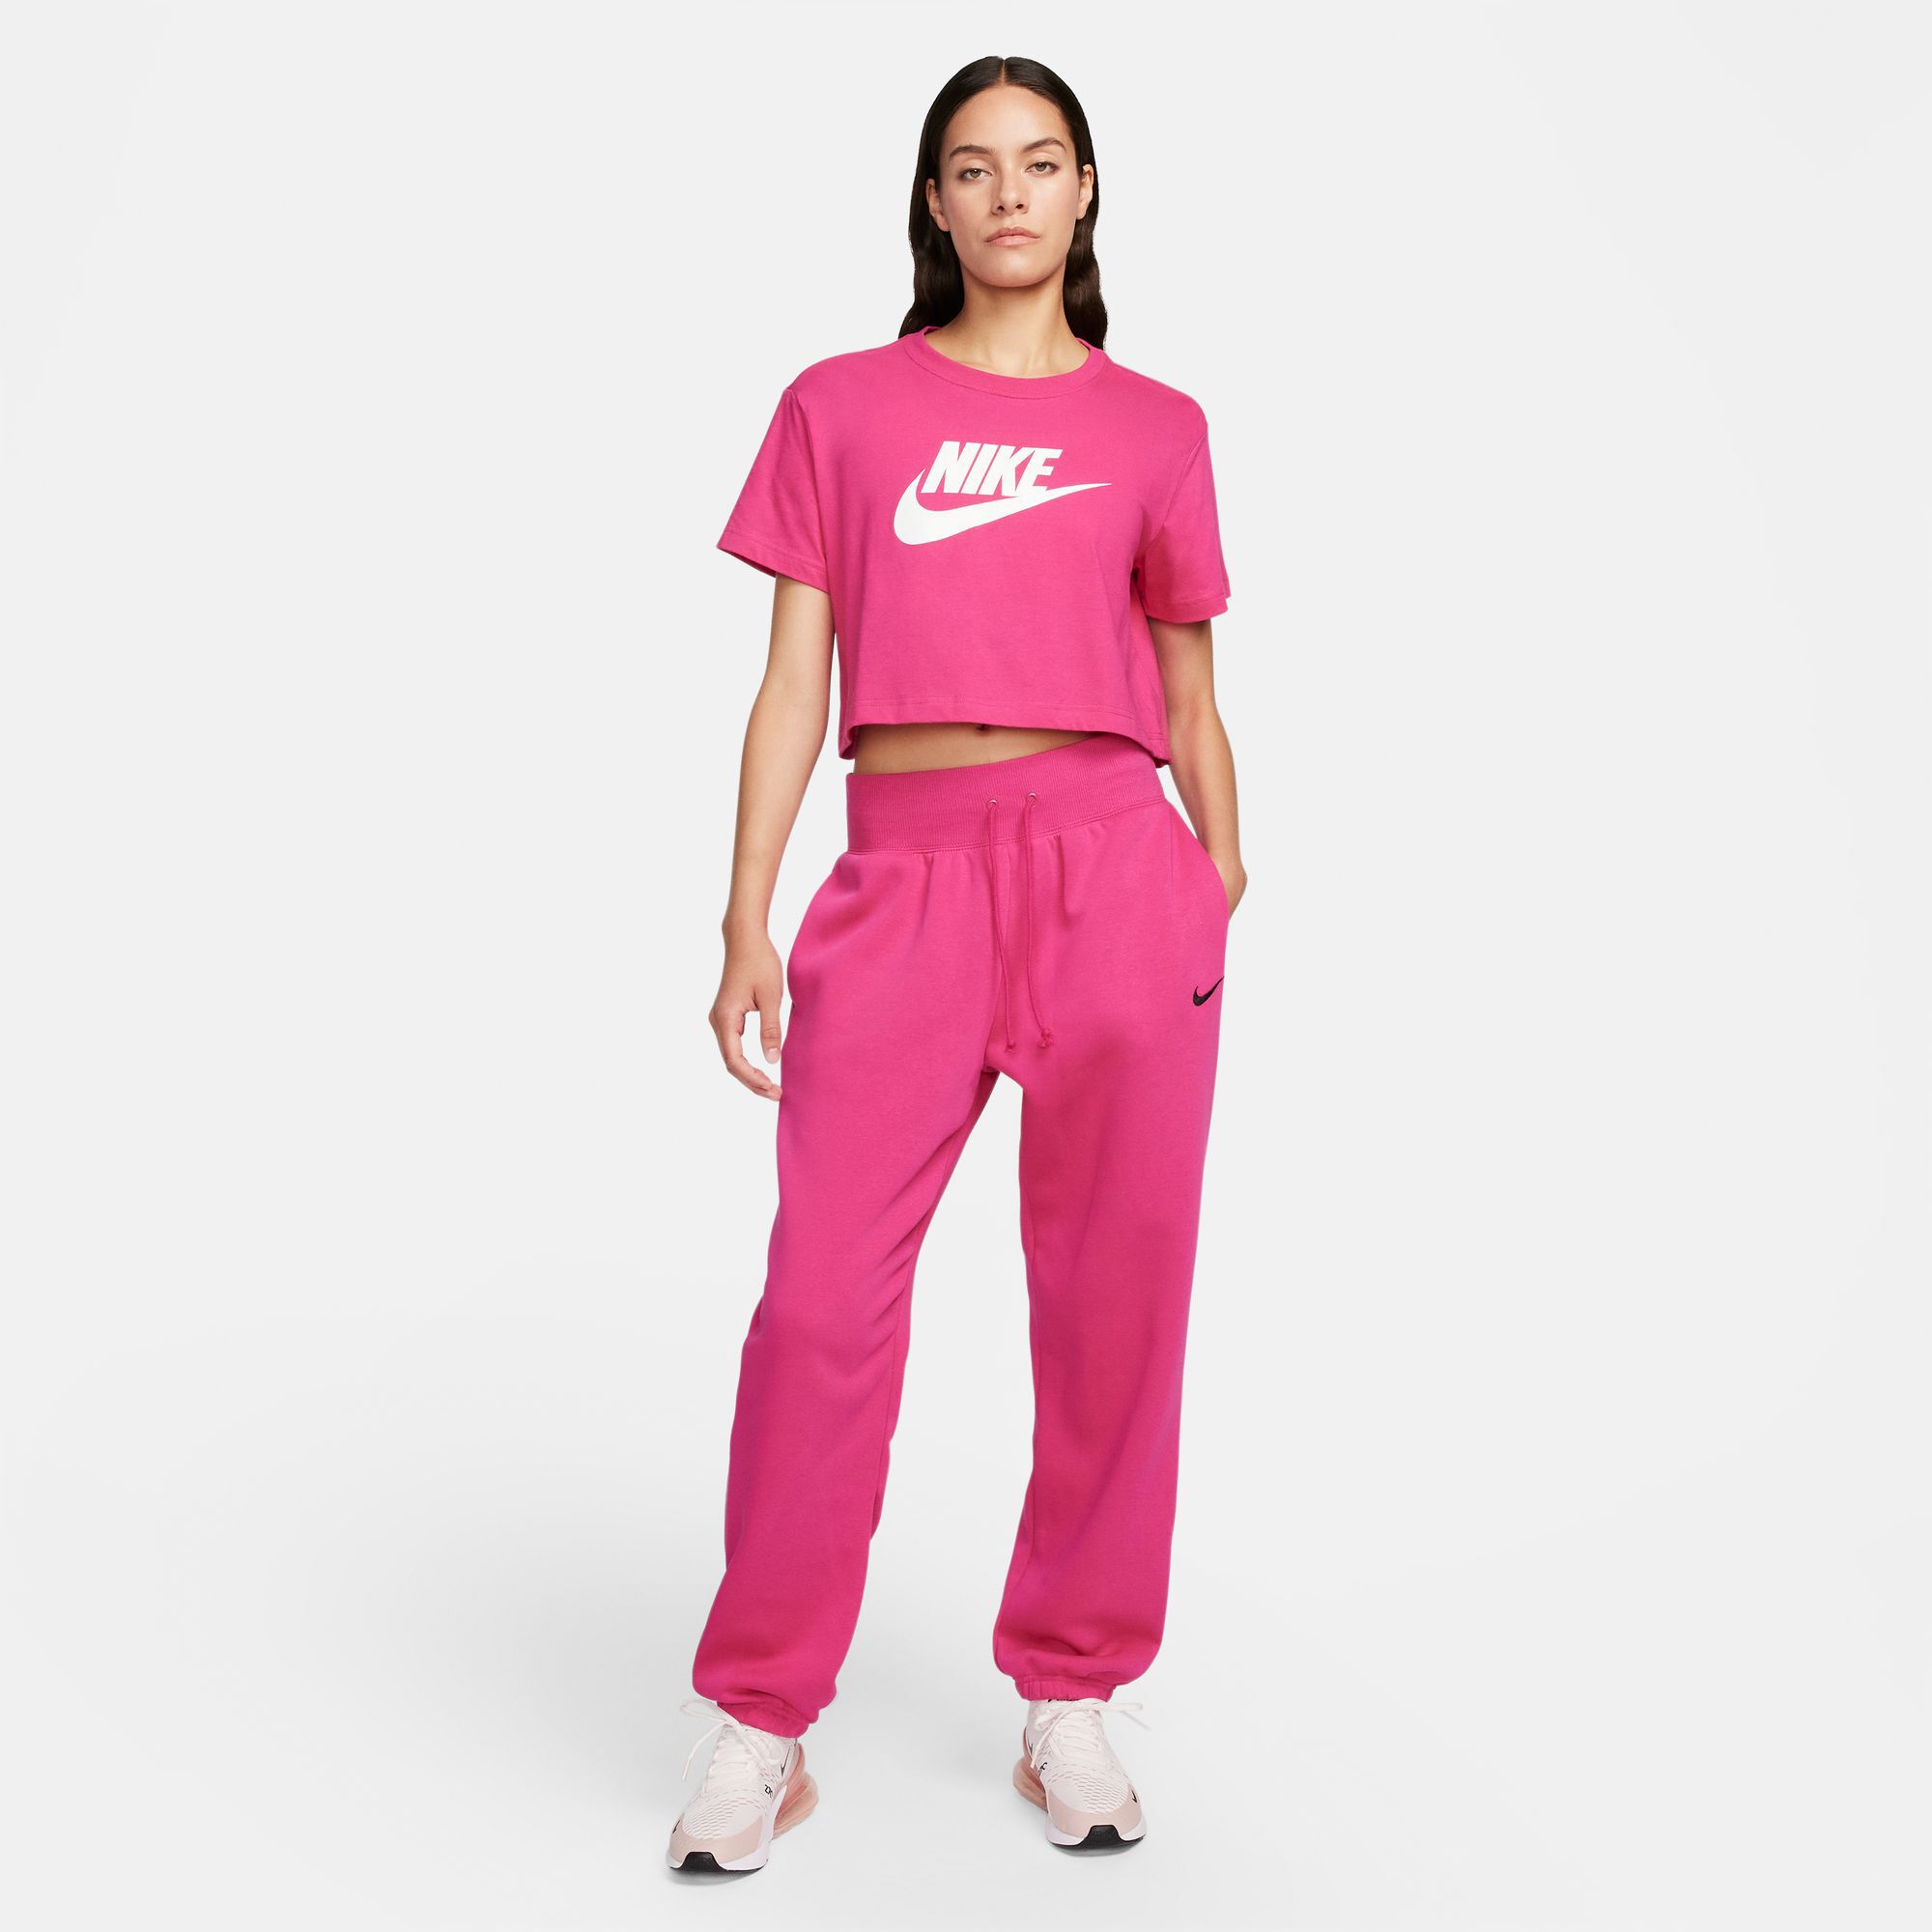 Nike Sportswear Essential, Baya de fuego, hi-res